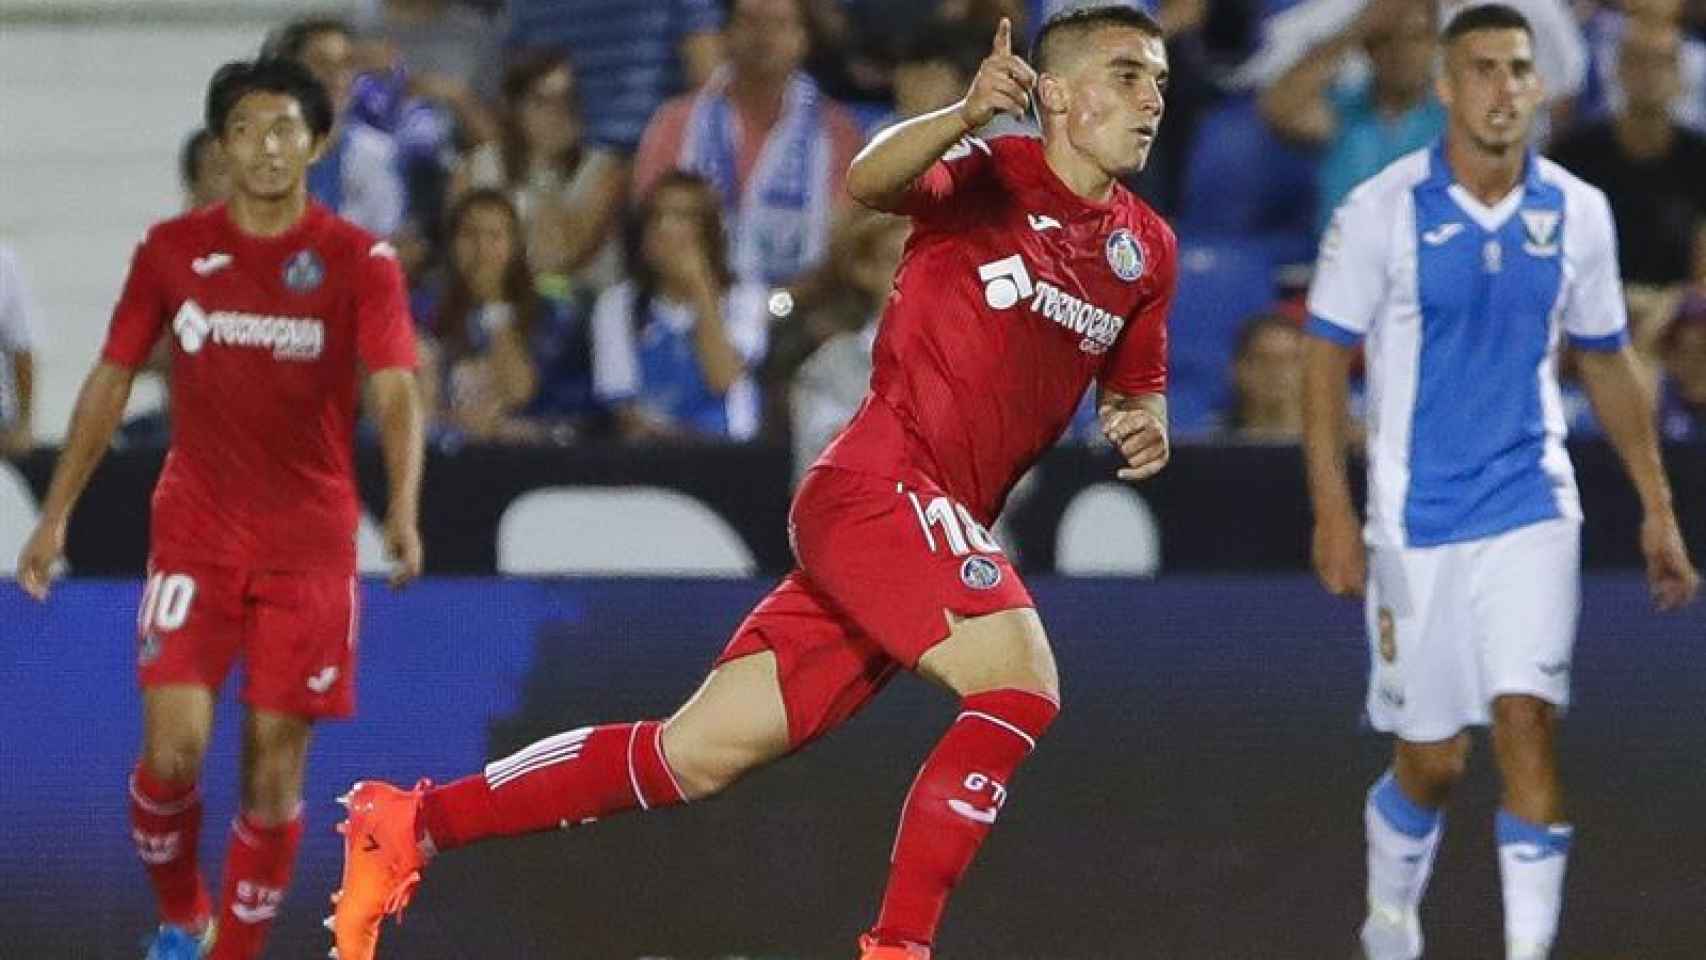 Mauro celebra el gol ante el Leganés.